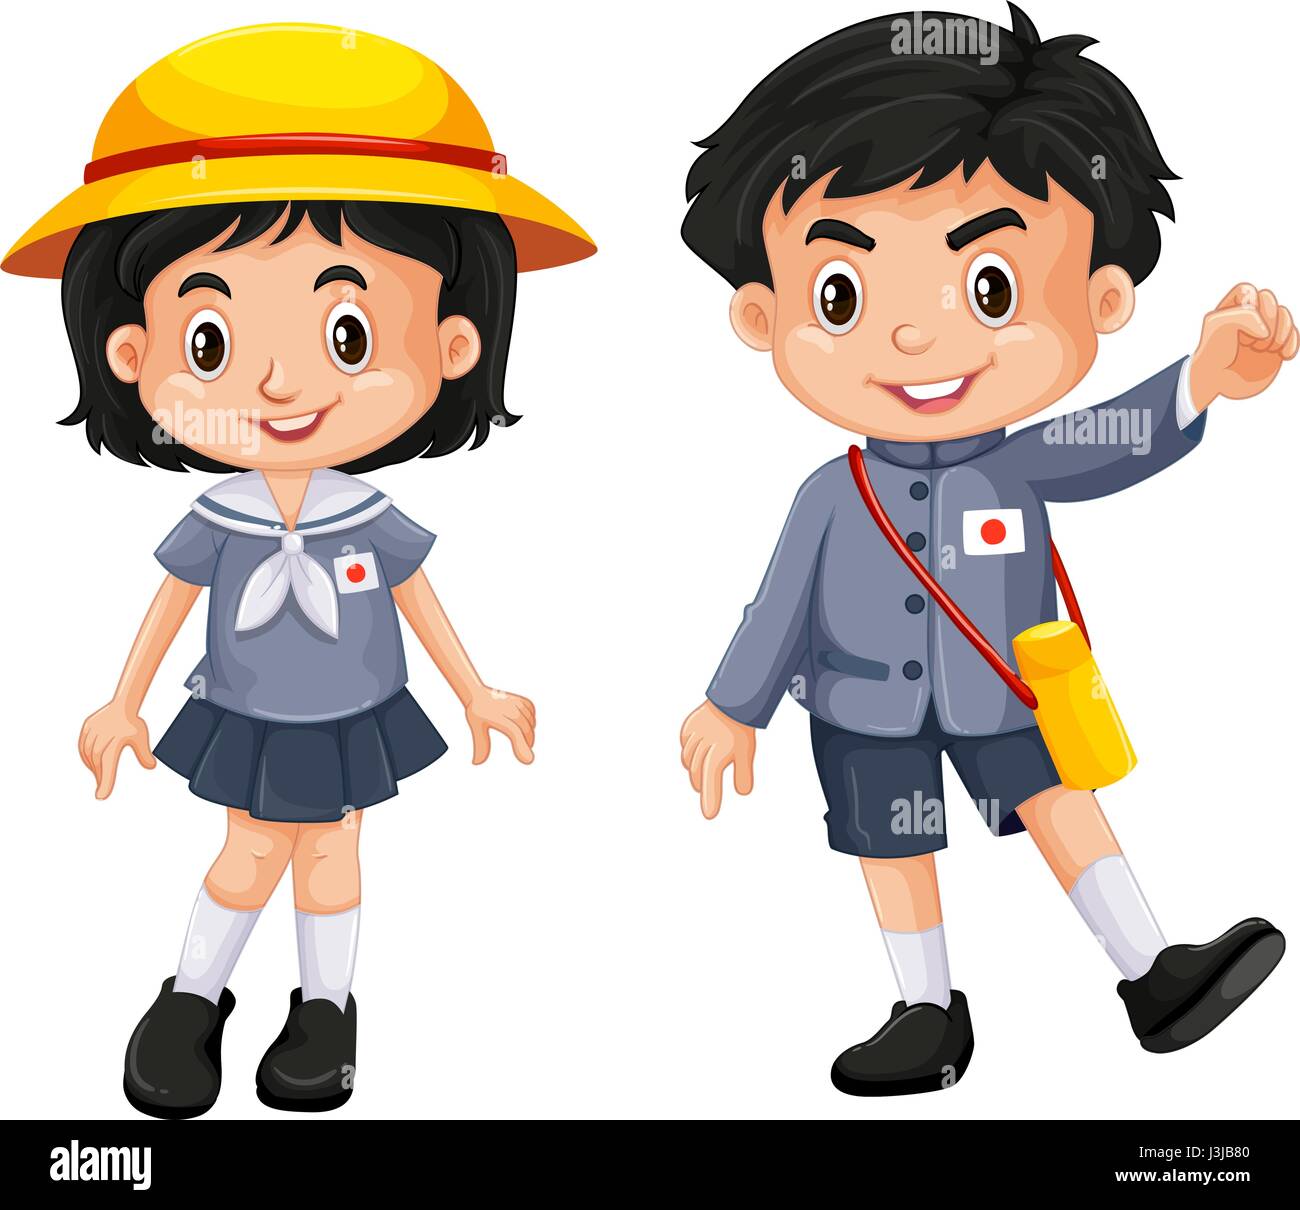 Japanese Boy And Girl In School Uniform Illustration Stock Vector Image Art Alamy